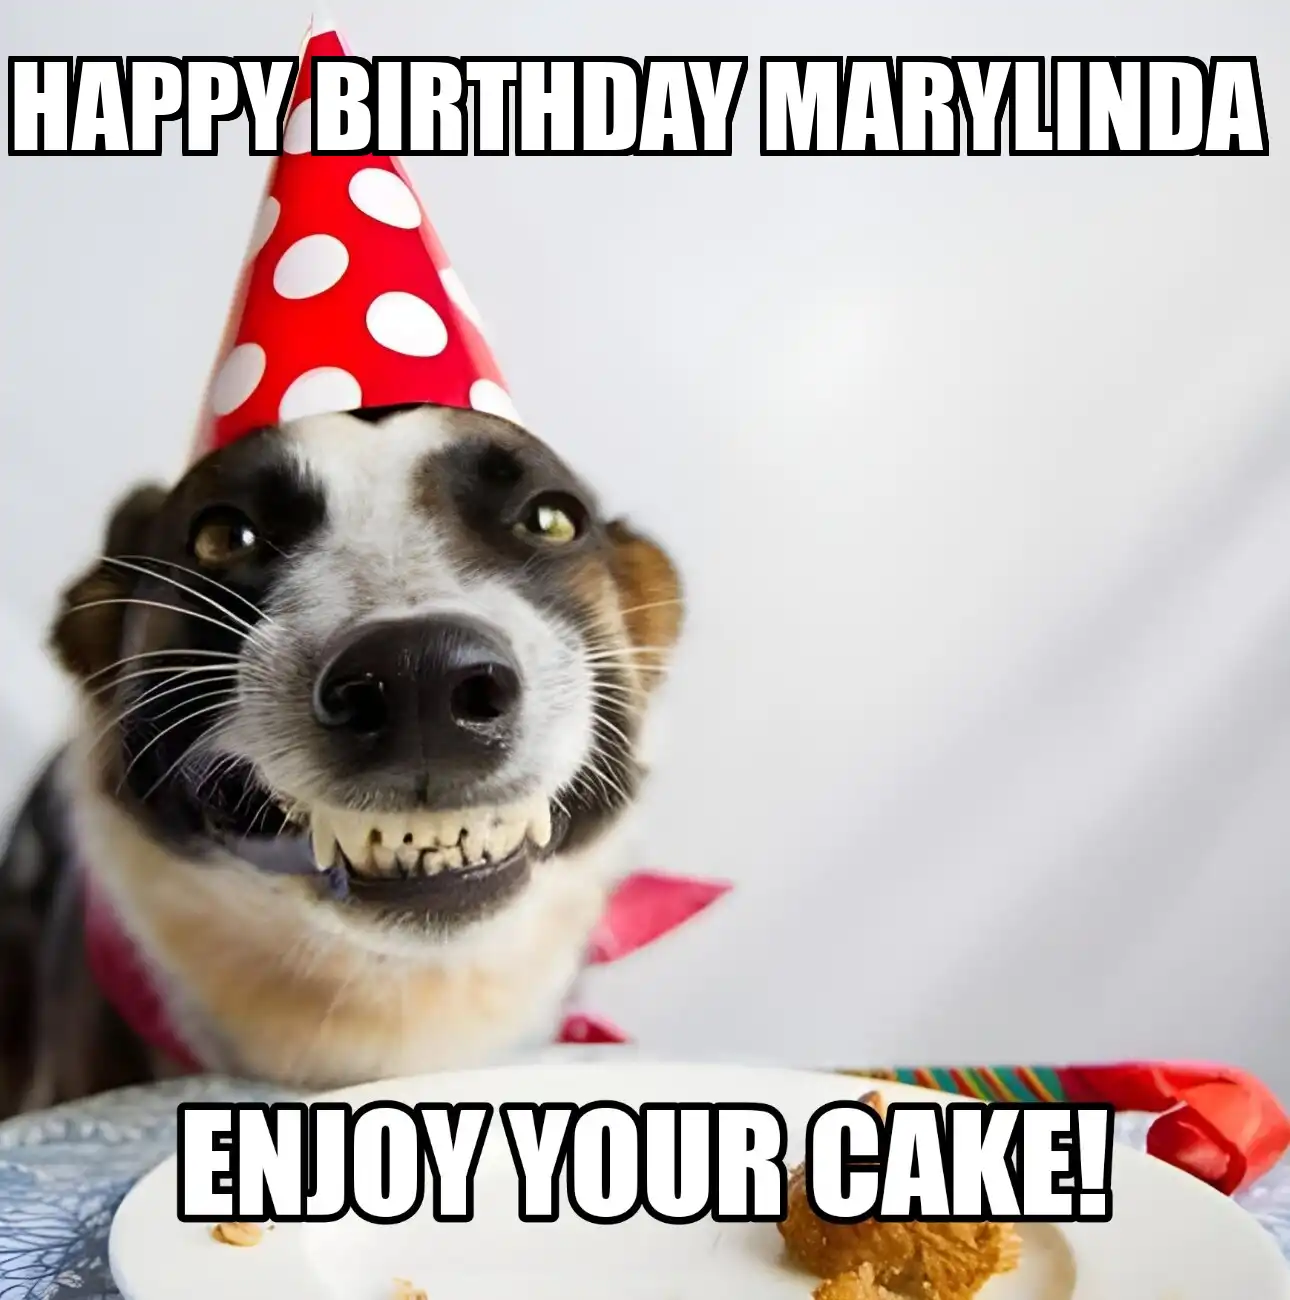 Happy Birthday Marylinda Enjoy Your Cake Dog Meme